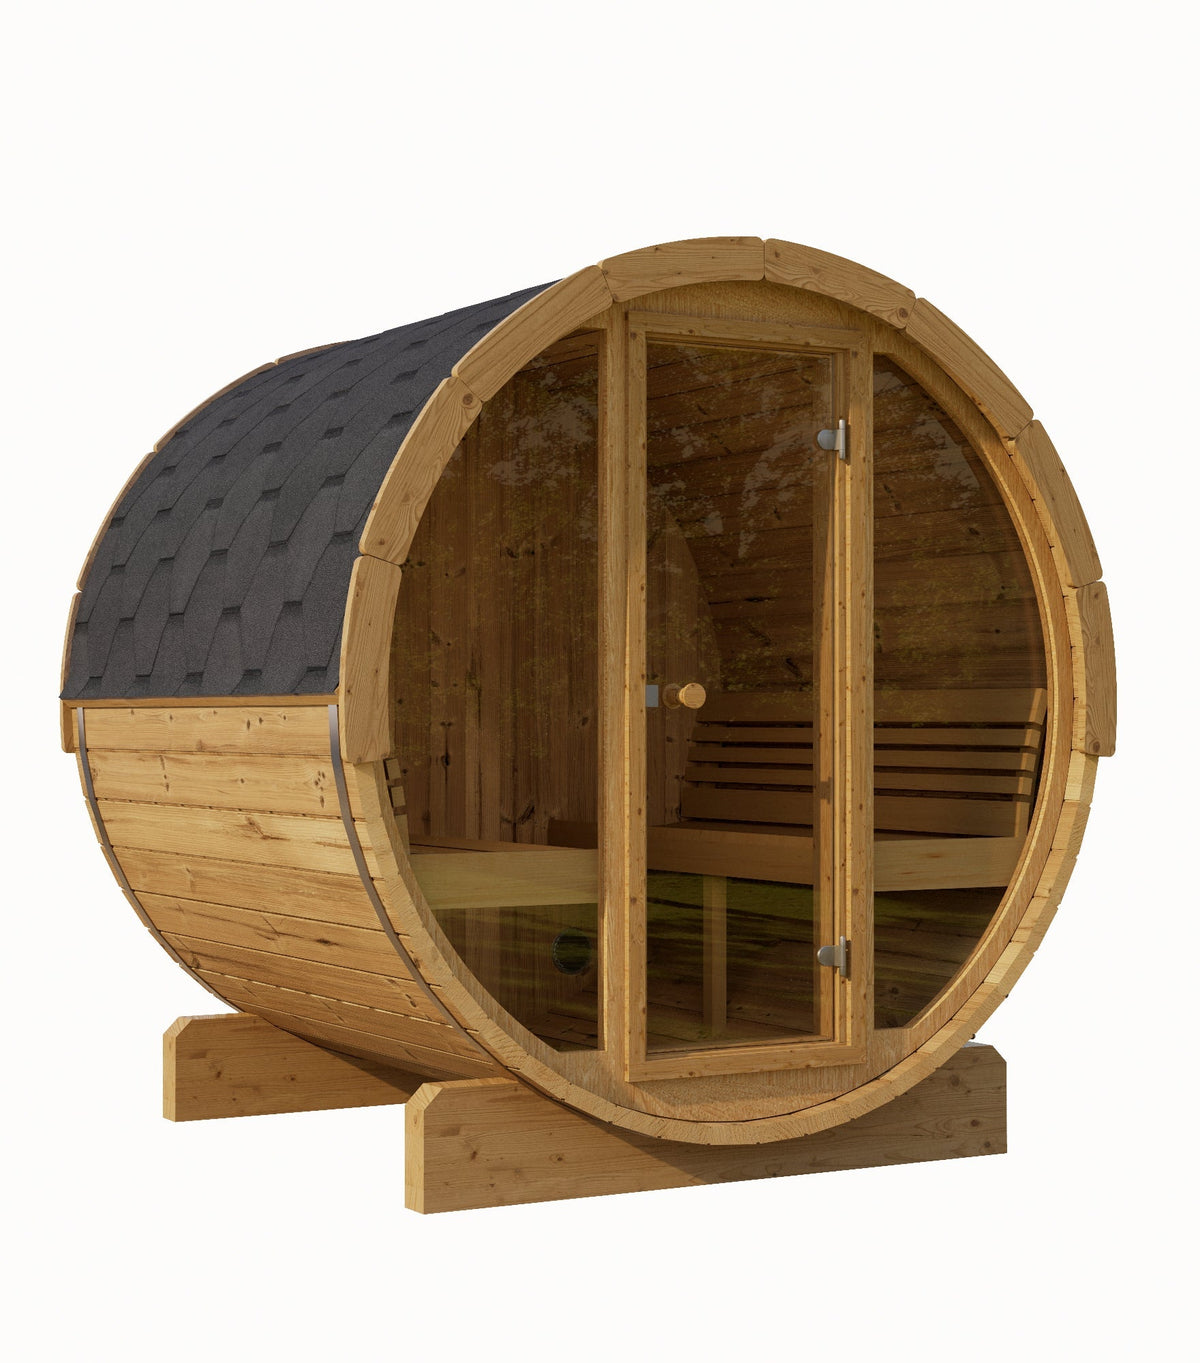 SaunaLife Model E8 Traditional 6 Person Sauna Barrel